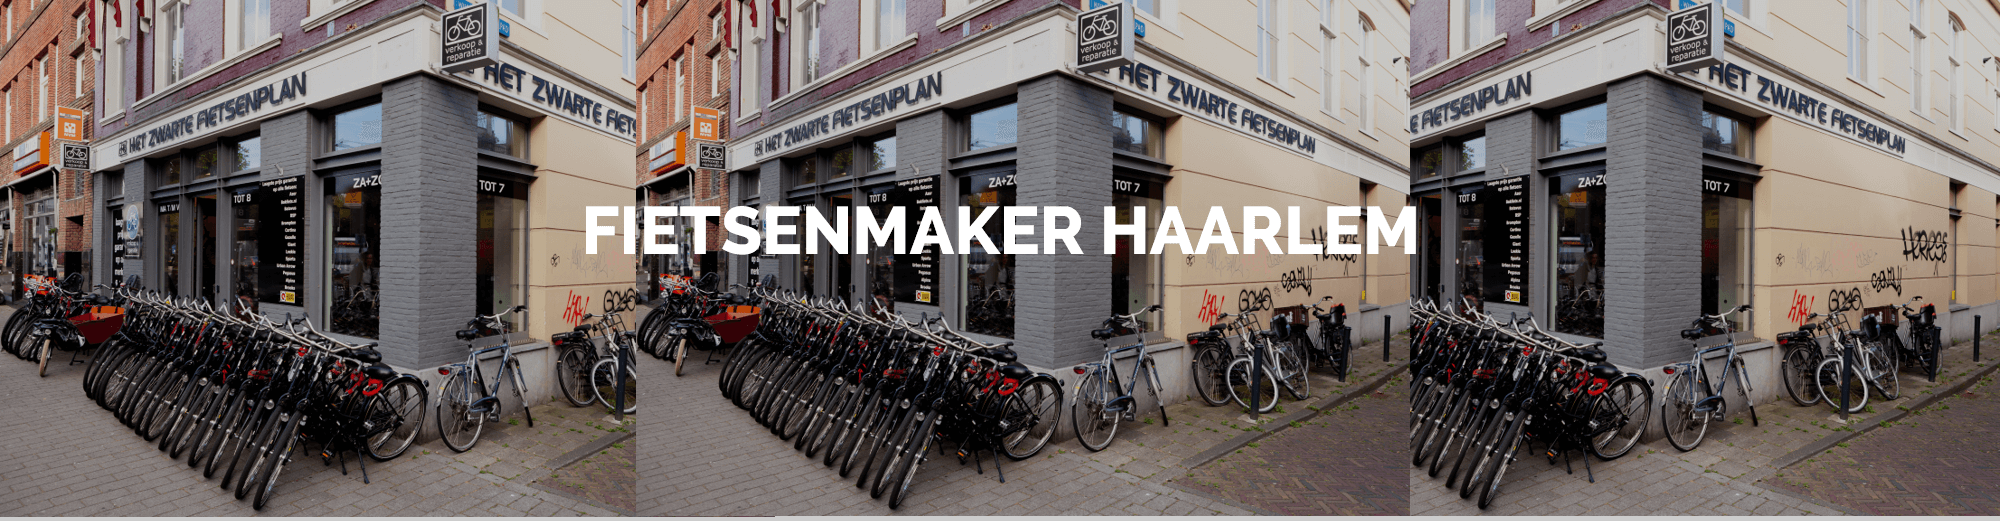 natuurkundige Gouverneur Opsplitsen Fietsenmaker in Haarlem | Het Zwarte Fietsenplan